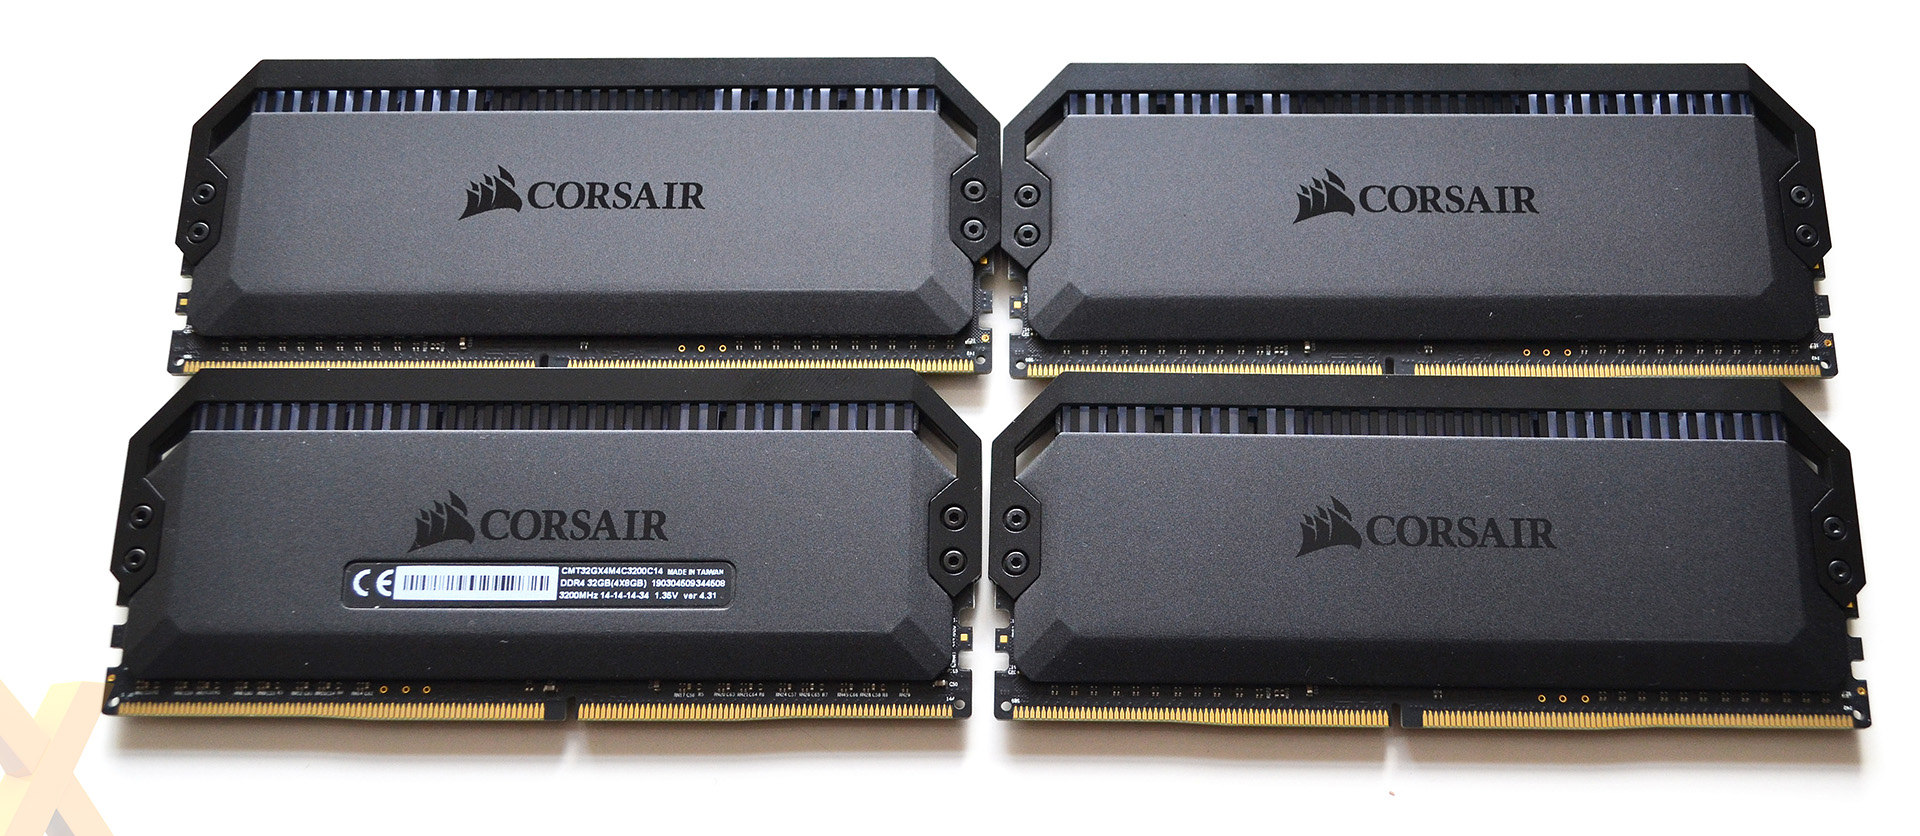 indlogering Smelte Patronise Review: Corsair Dominator Platinum RGB 32GB DDR4-3200 (CMT32GX4M4C3200C14)  - RAM - HEXUS.net